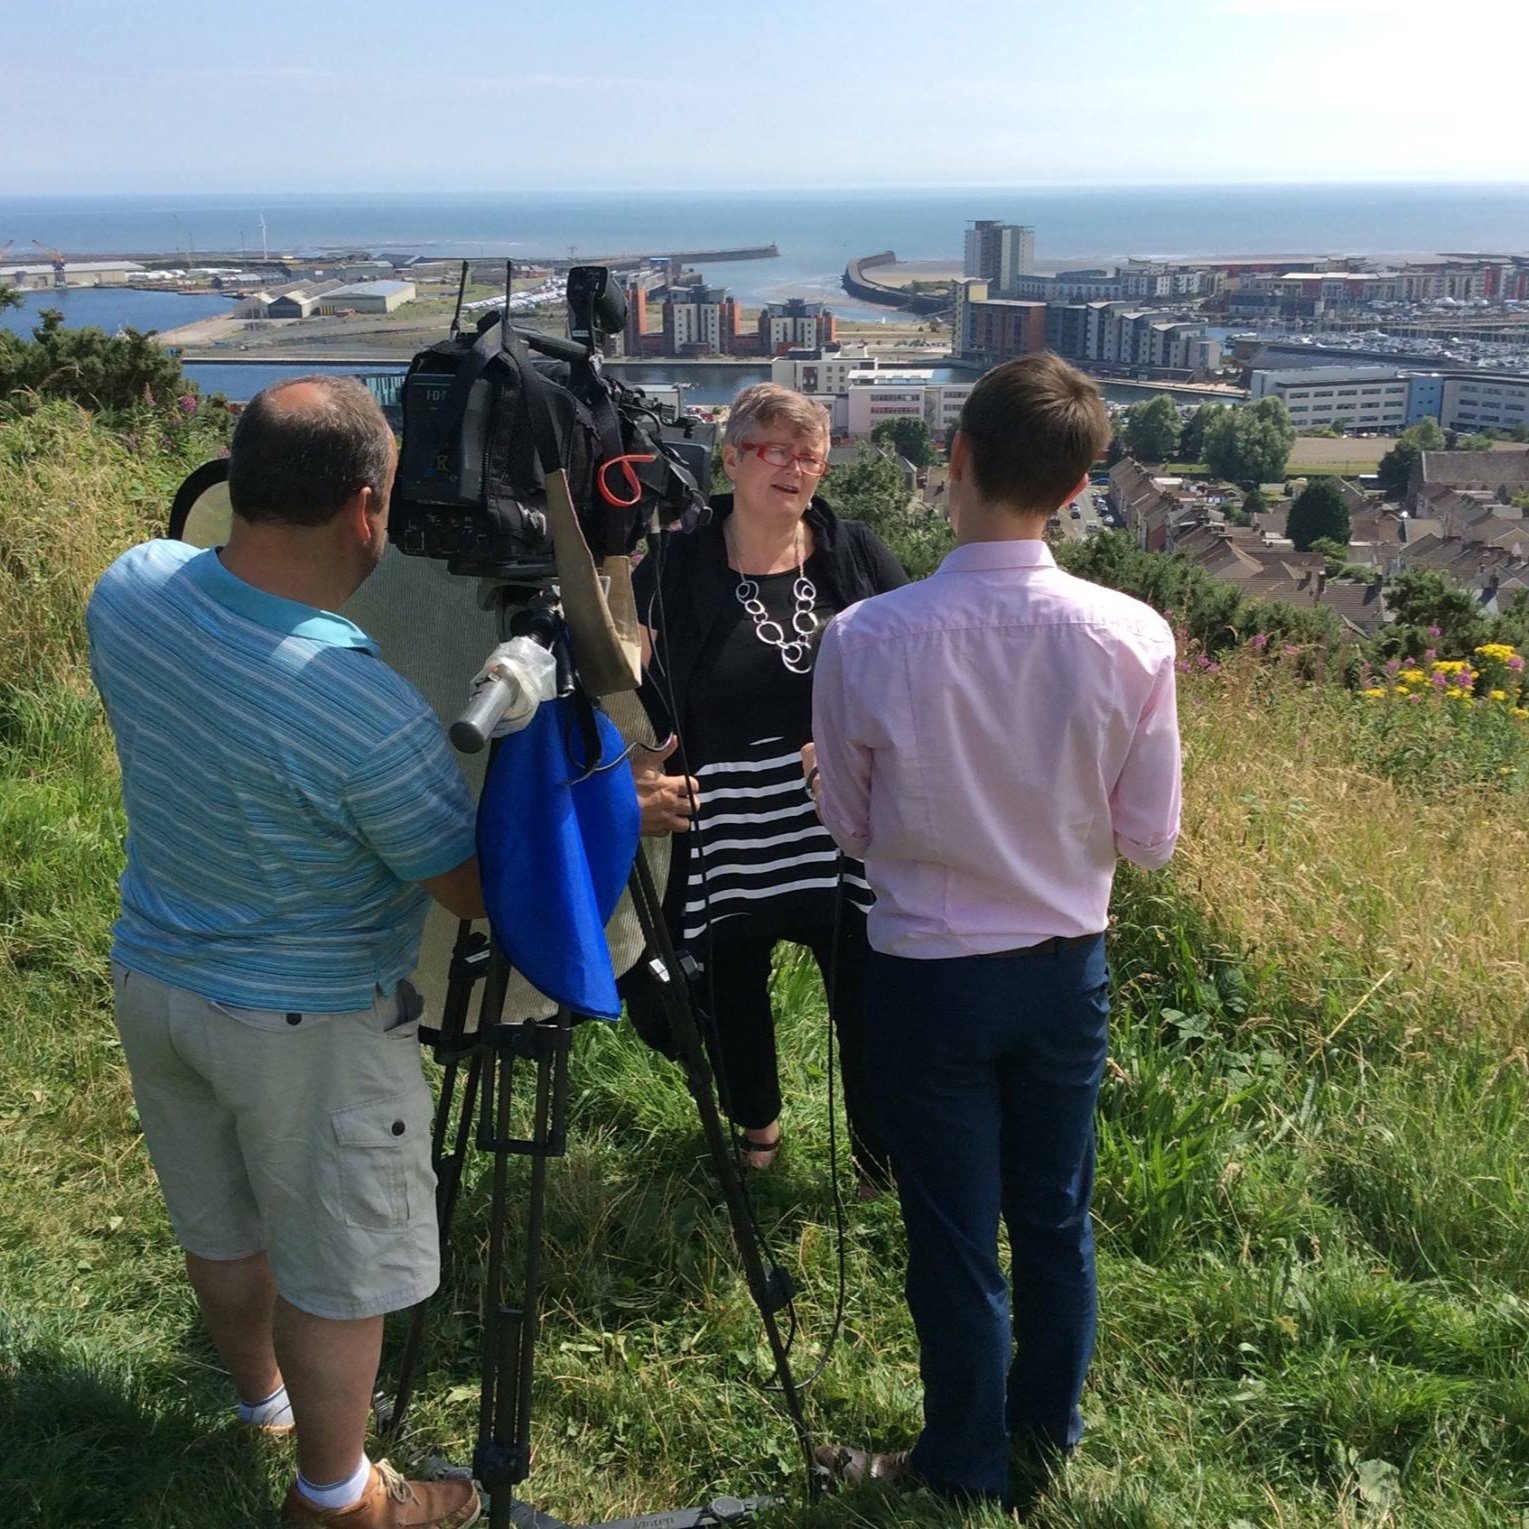 Carolyn interviewed by news crew overlooking Swansea